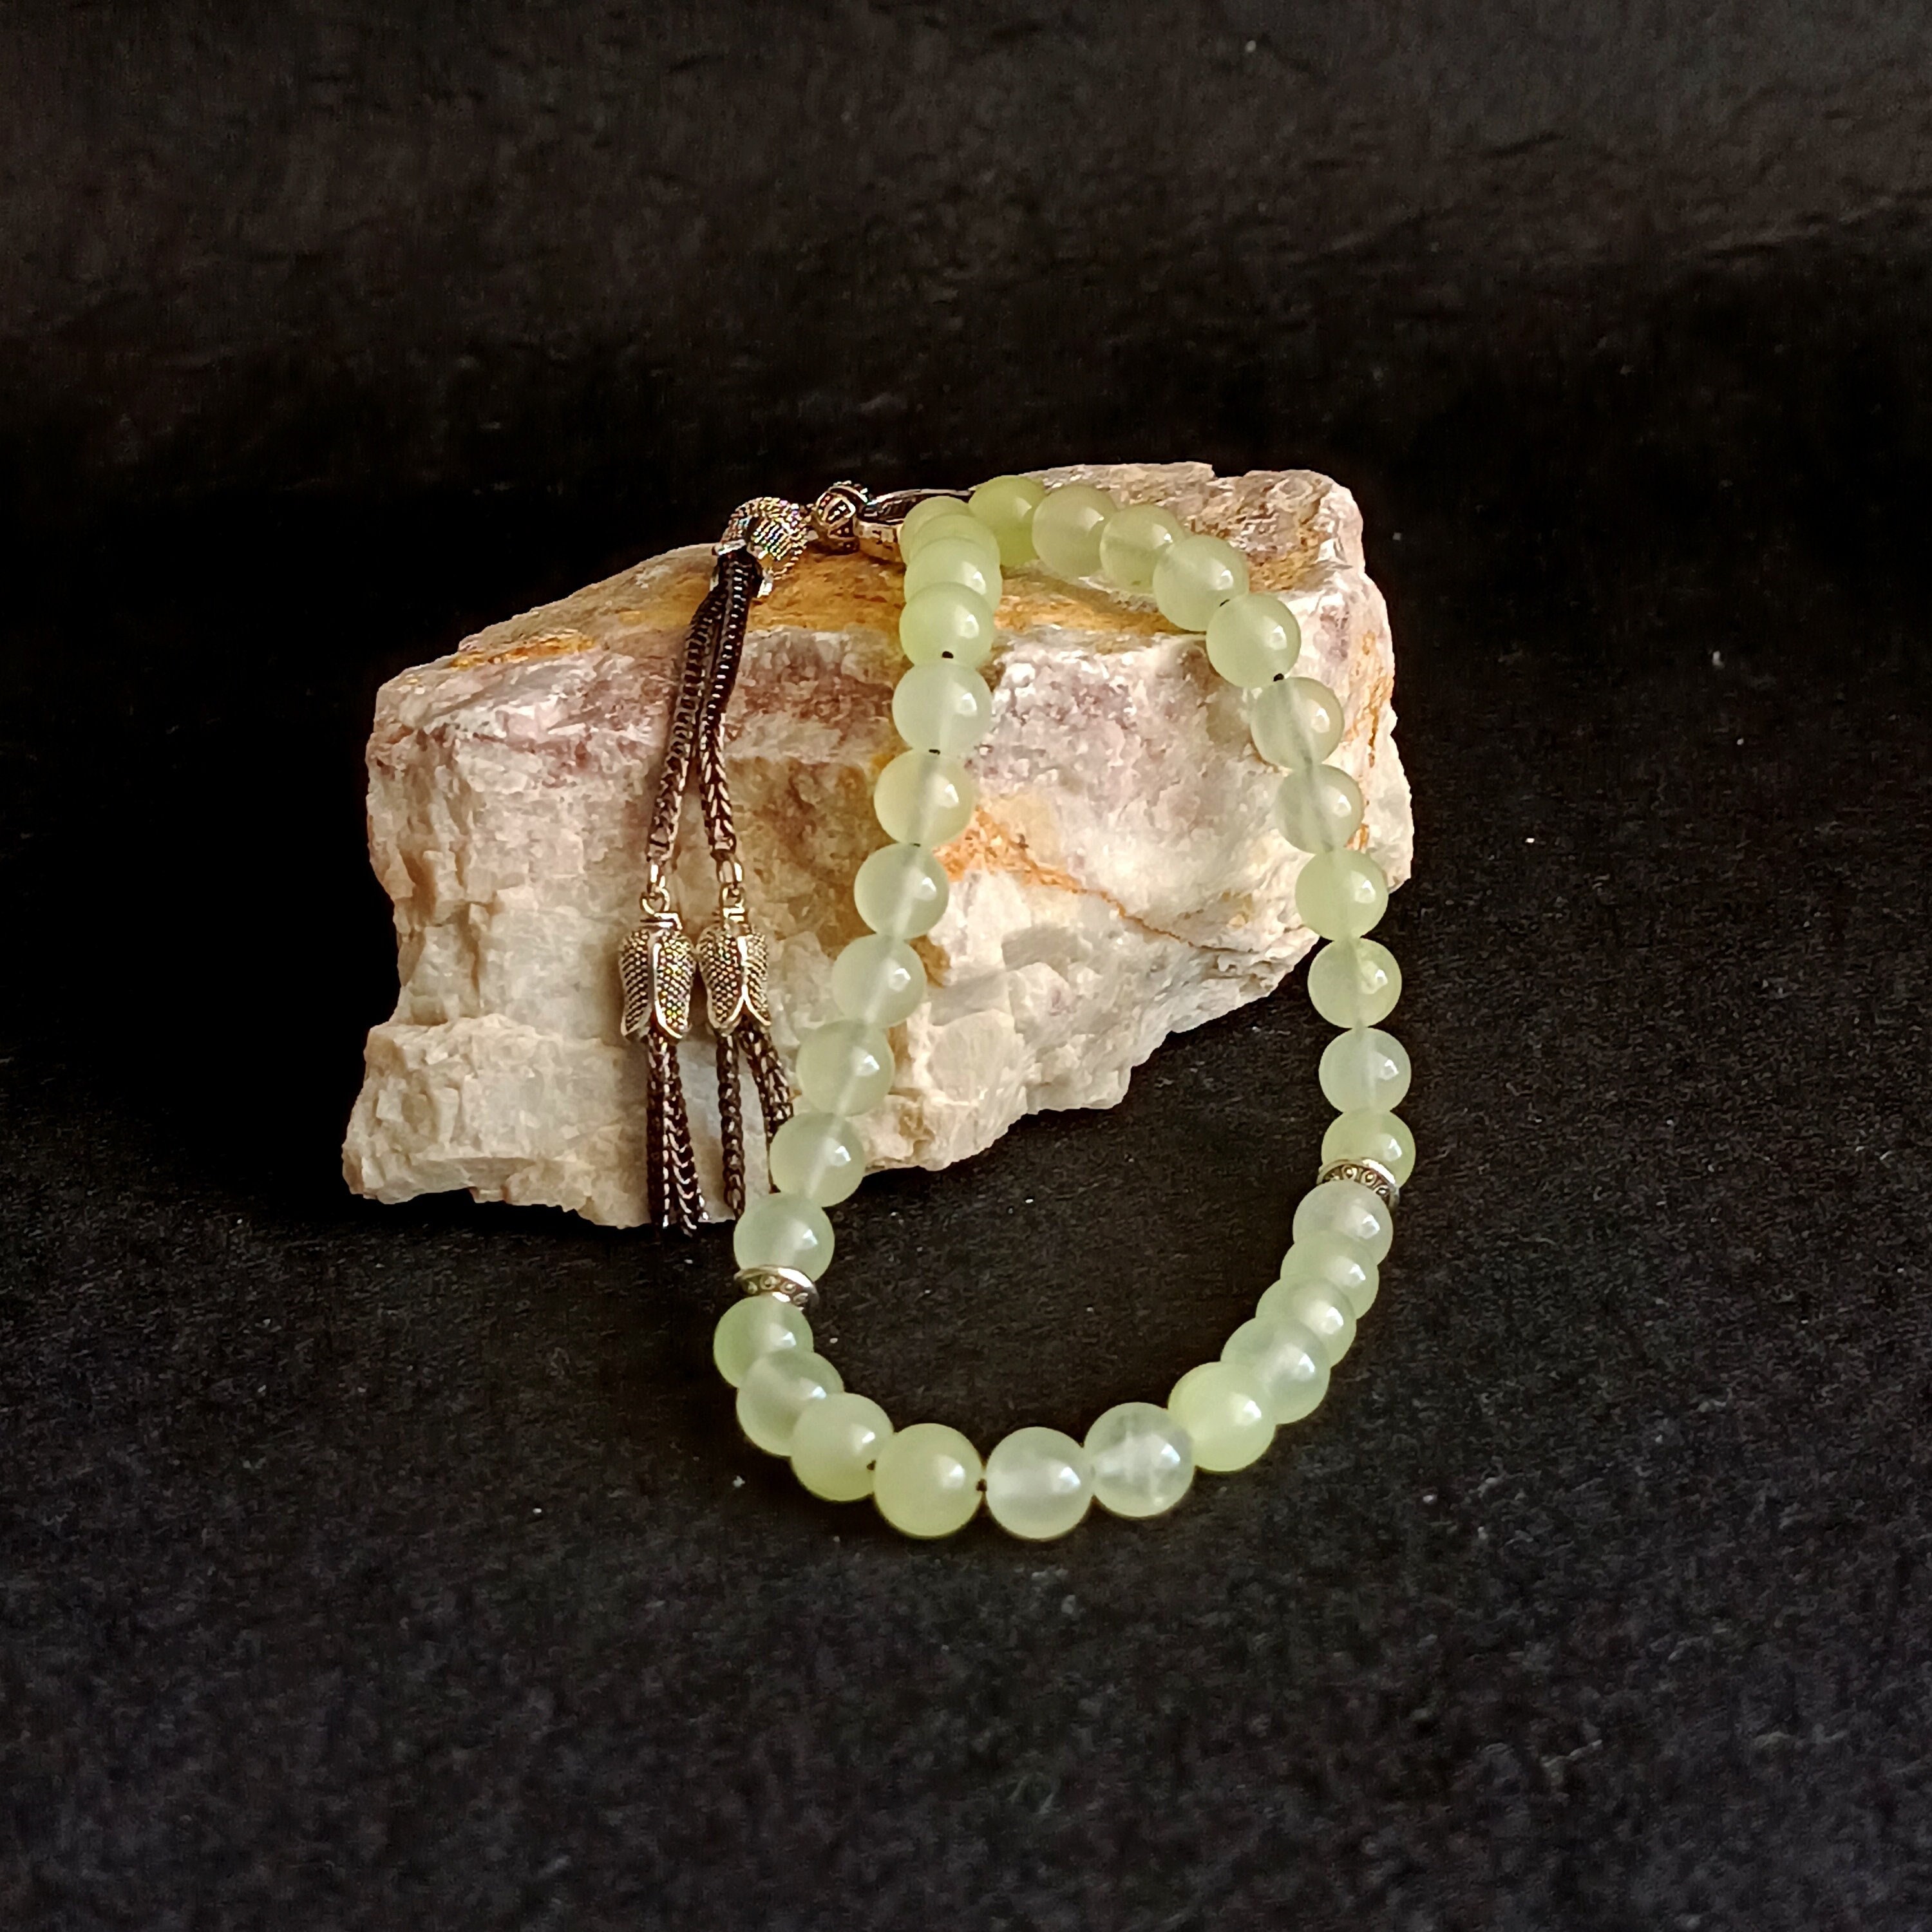 13mm Grade A Myanmar Jadeite Jade Beads For Jewelry Making Diy Bracelet  Necklace Islamic Tasbih Muslim Rosary Bead Accessories